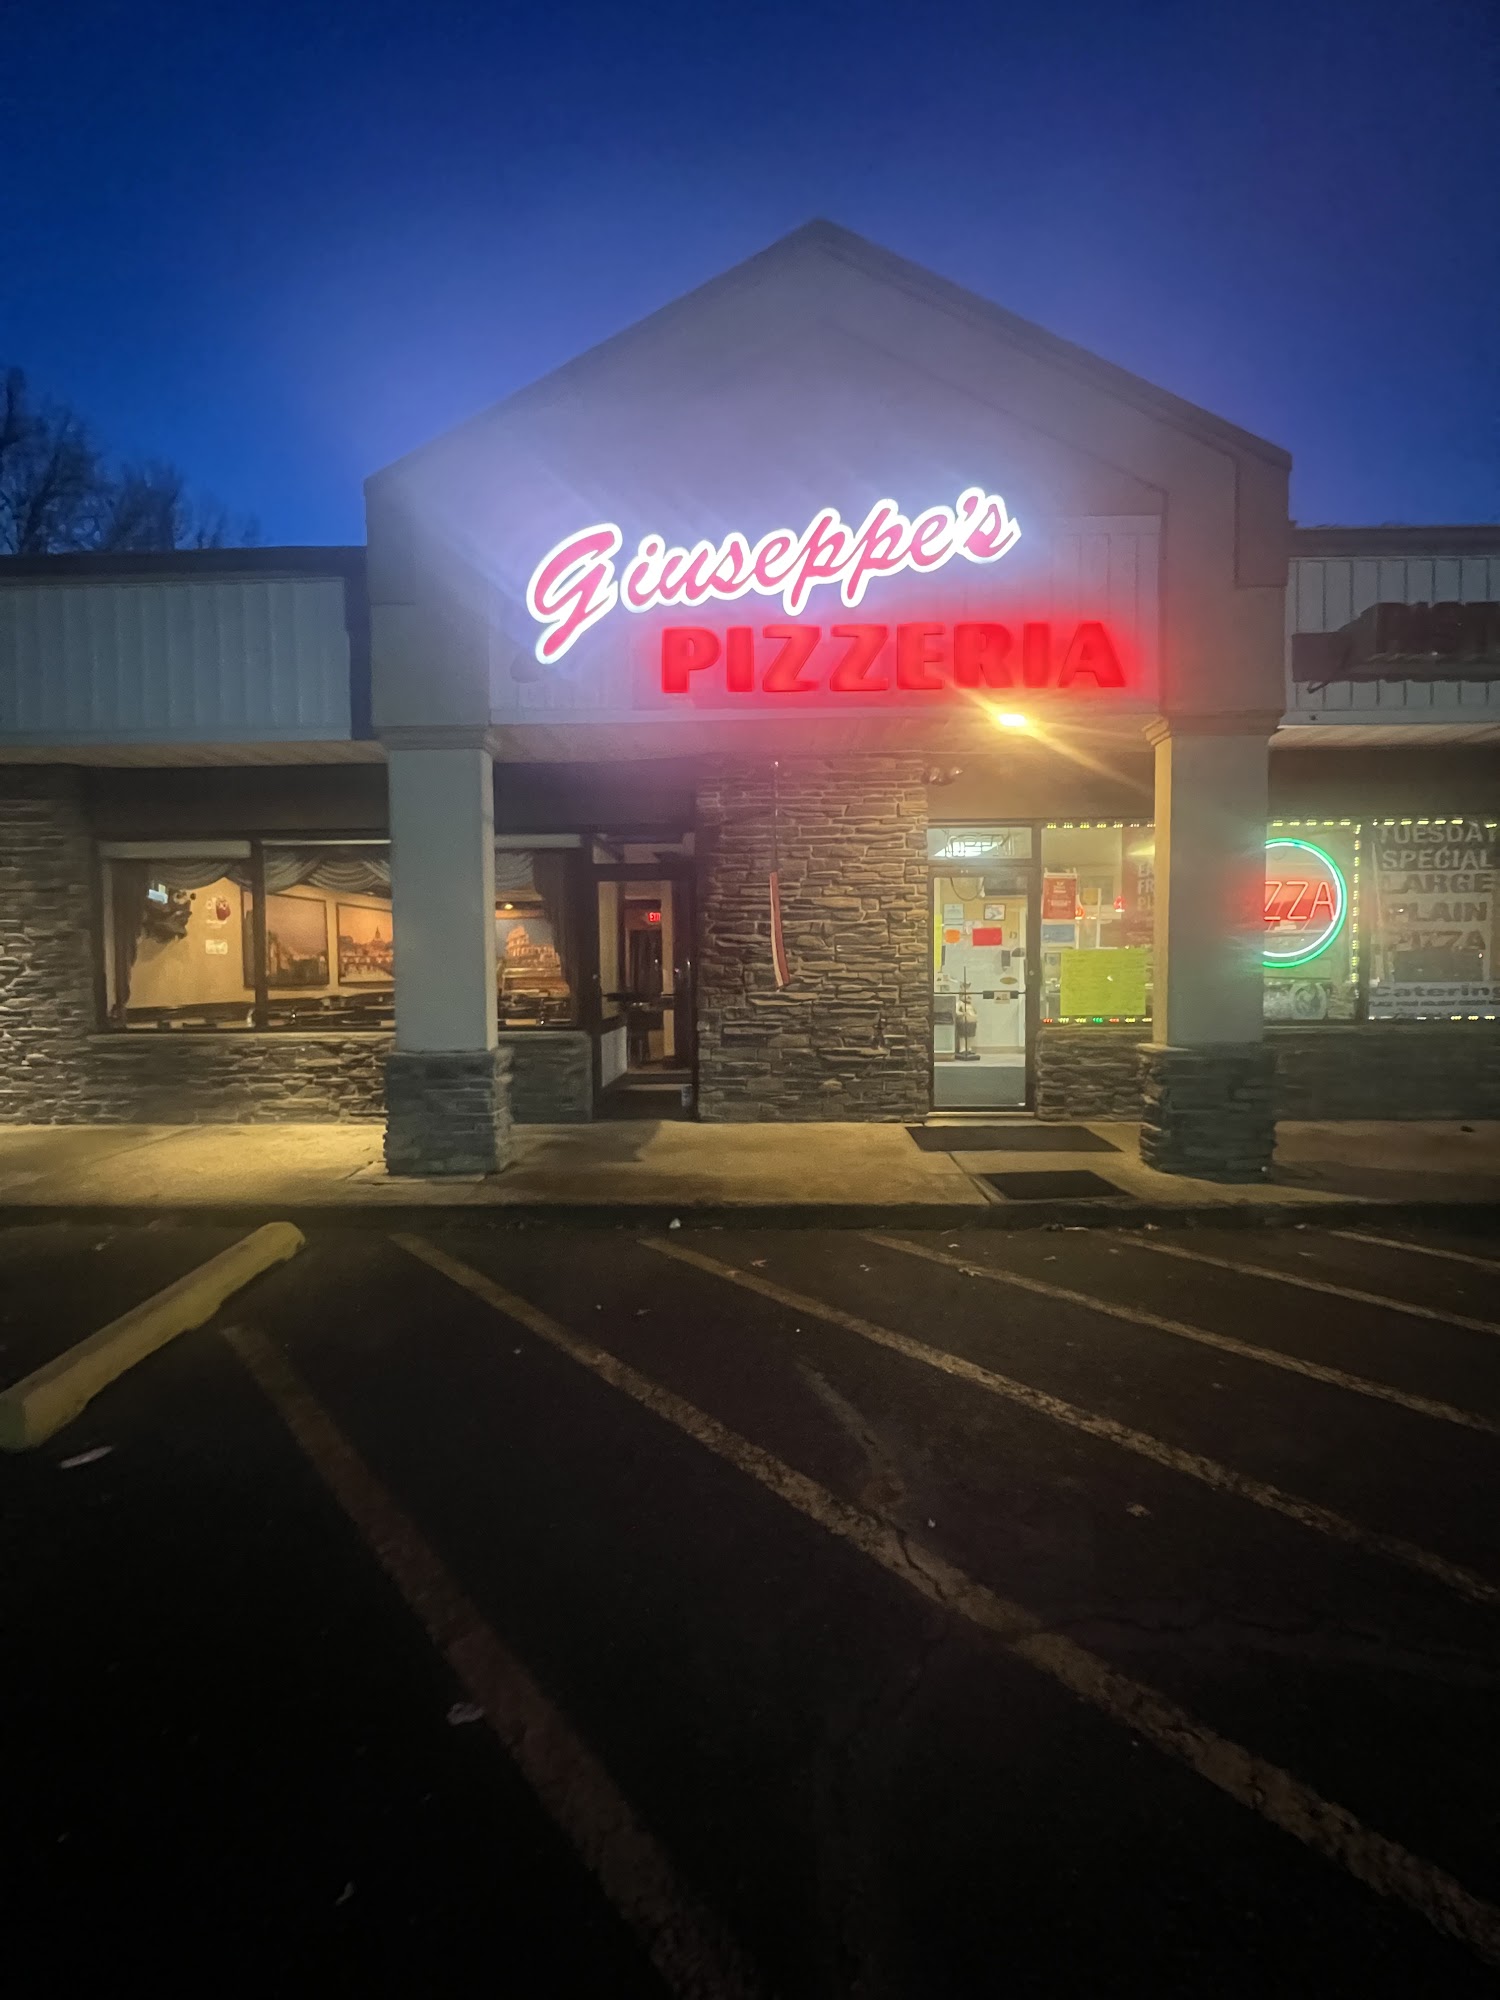 Giuseppe’s Pizzeria and Pasta NJ